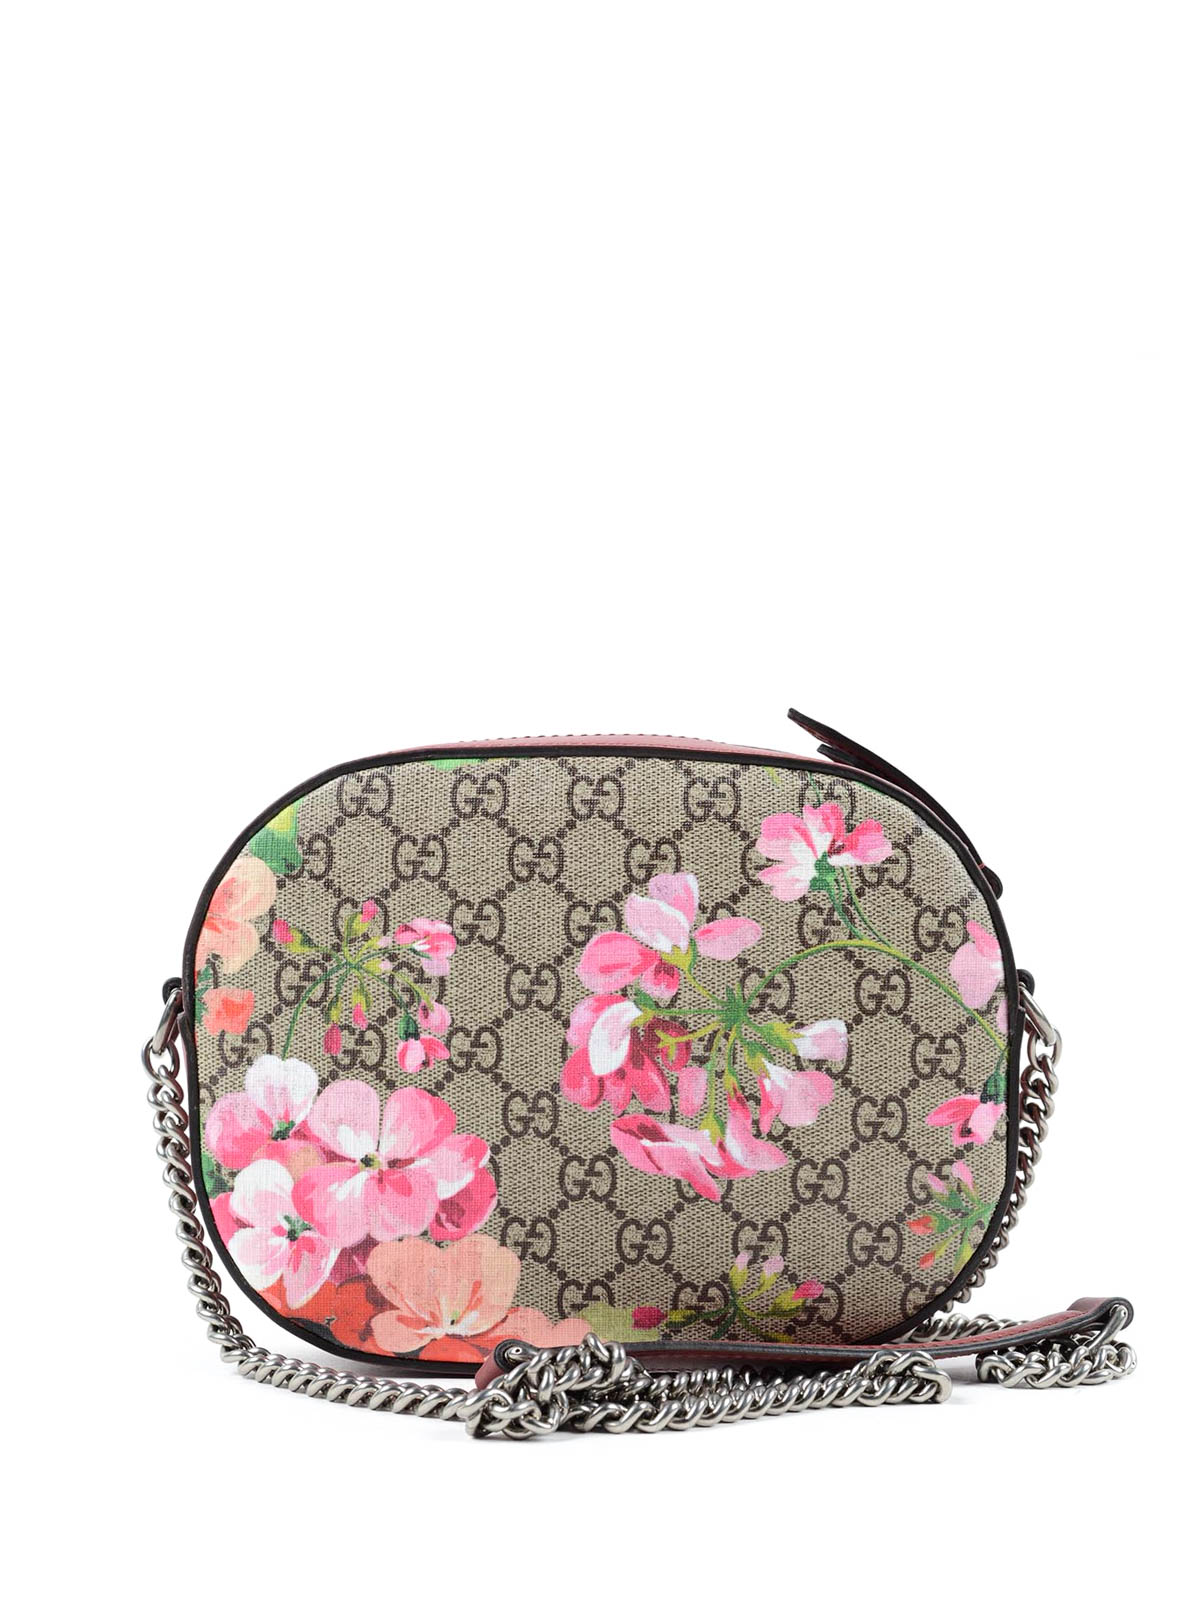 gucci blooms purse